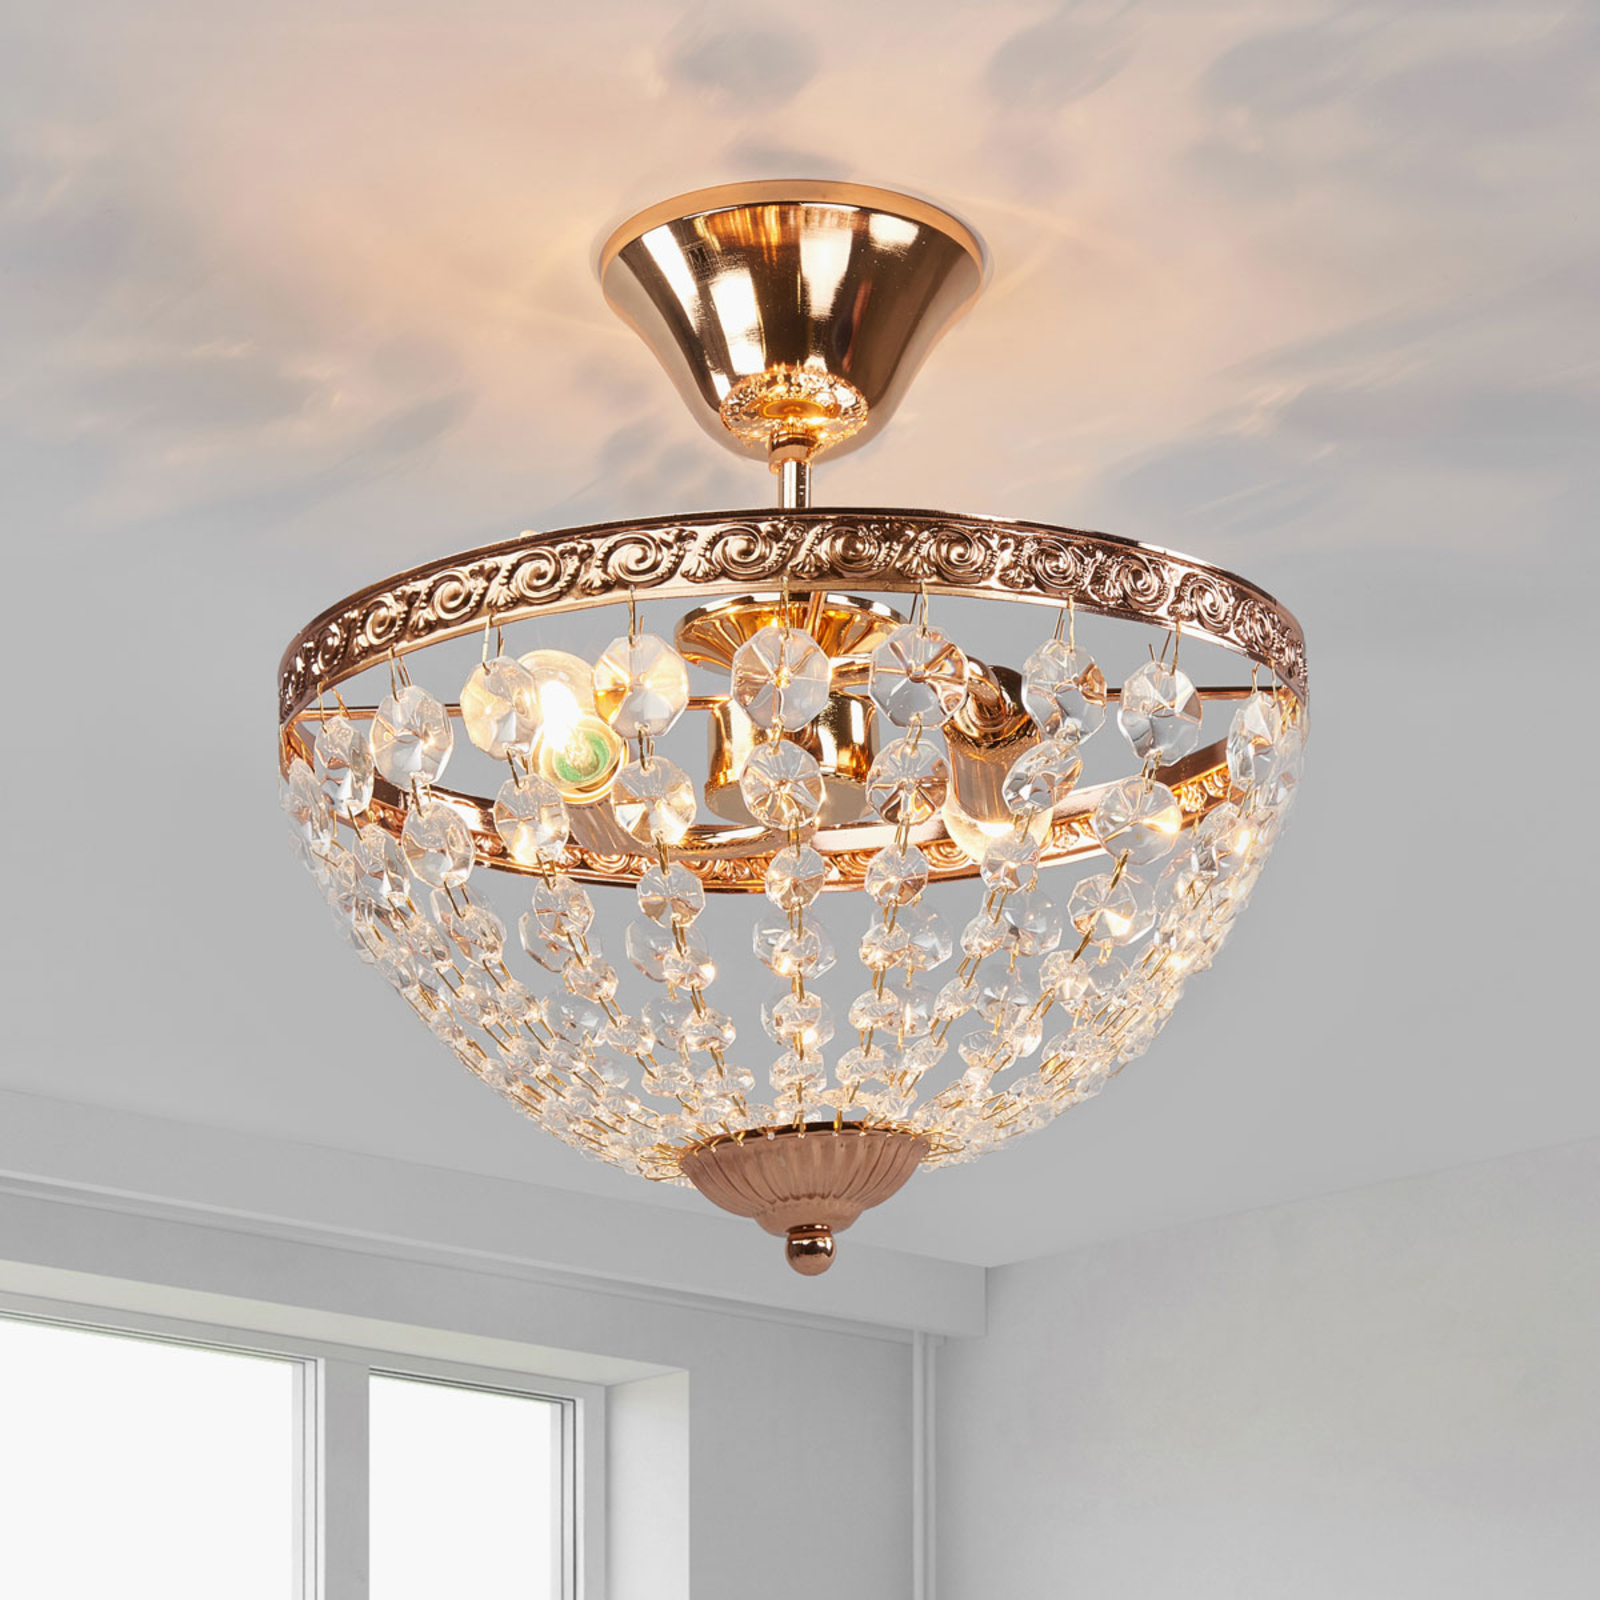 Decorative ceiling light Hanaskog